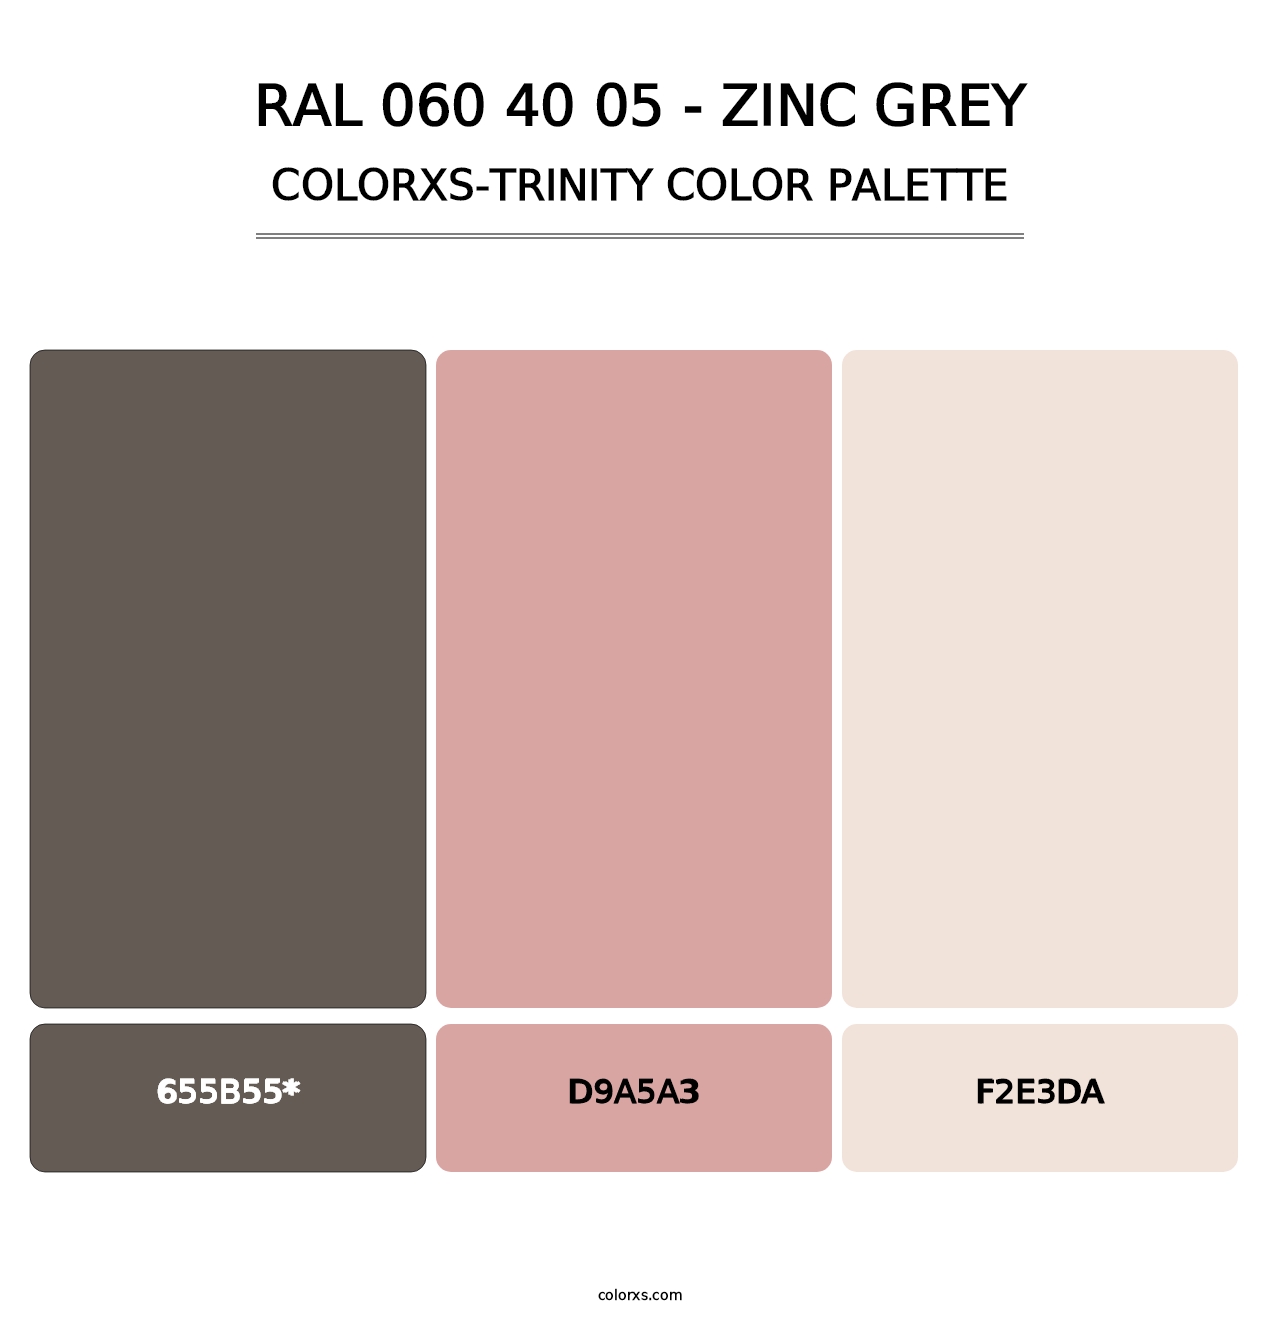 RAL 060 40 05 - Zinc Grey - Colorxs Trinity Palette